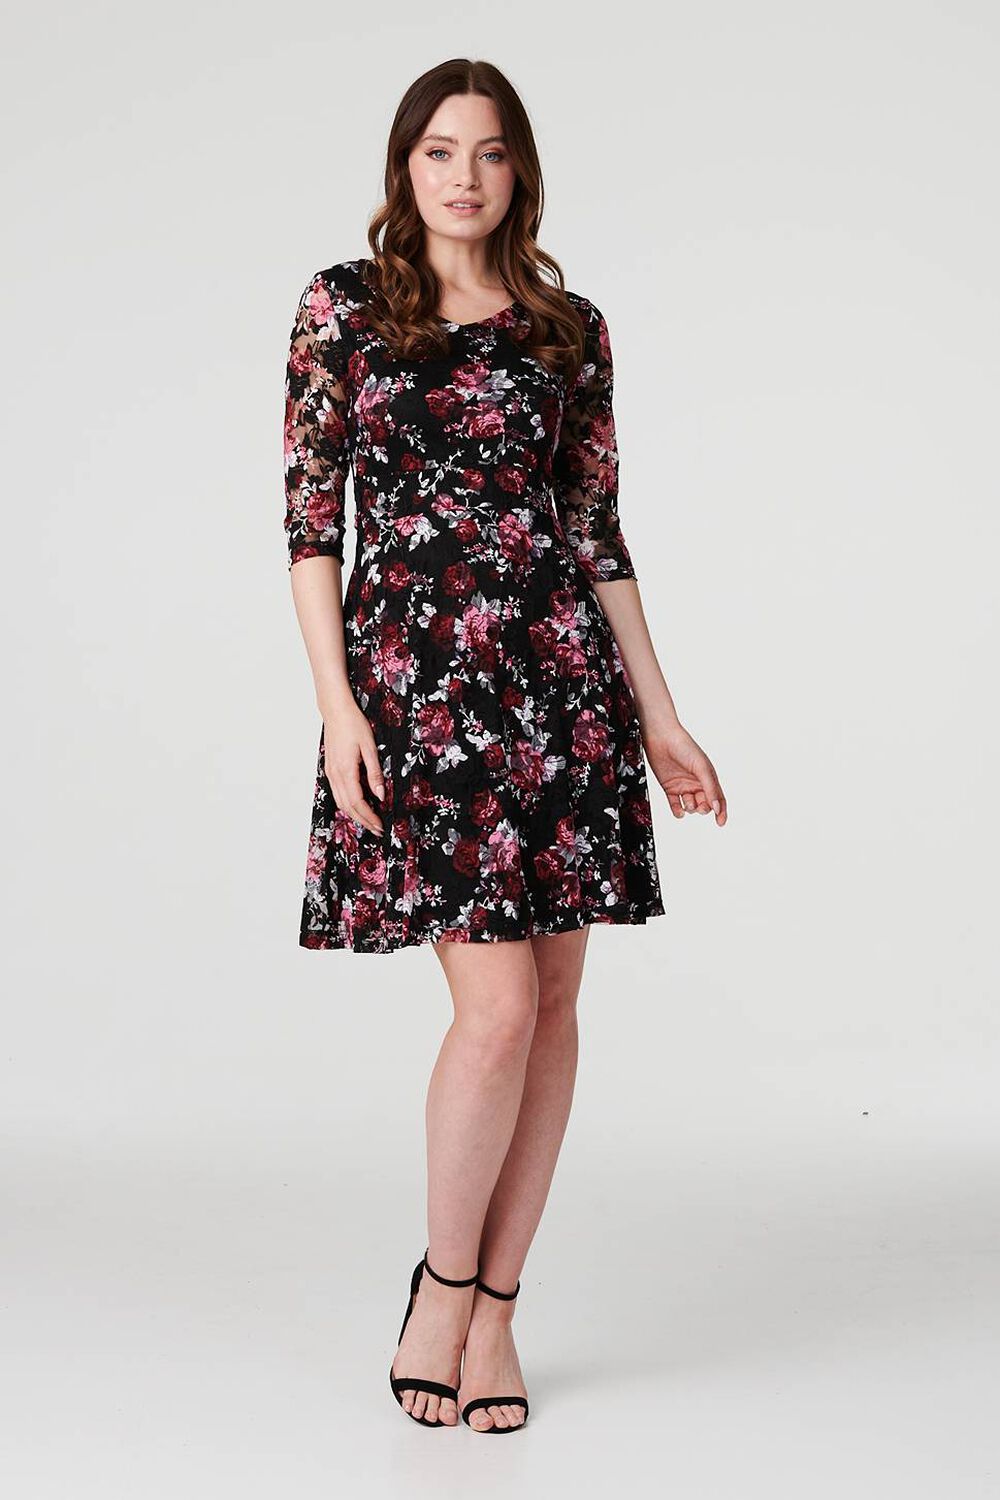 Izabel London Red - Rose Print Lace Overlay Short Dress, Size: 12